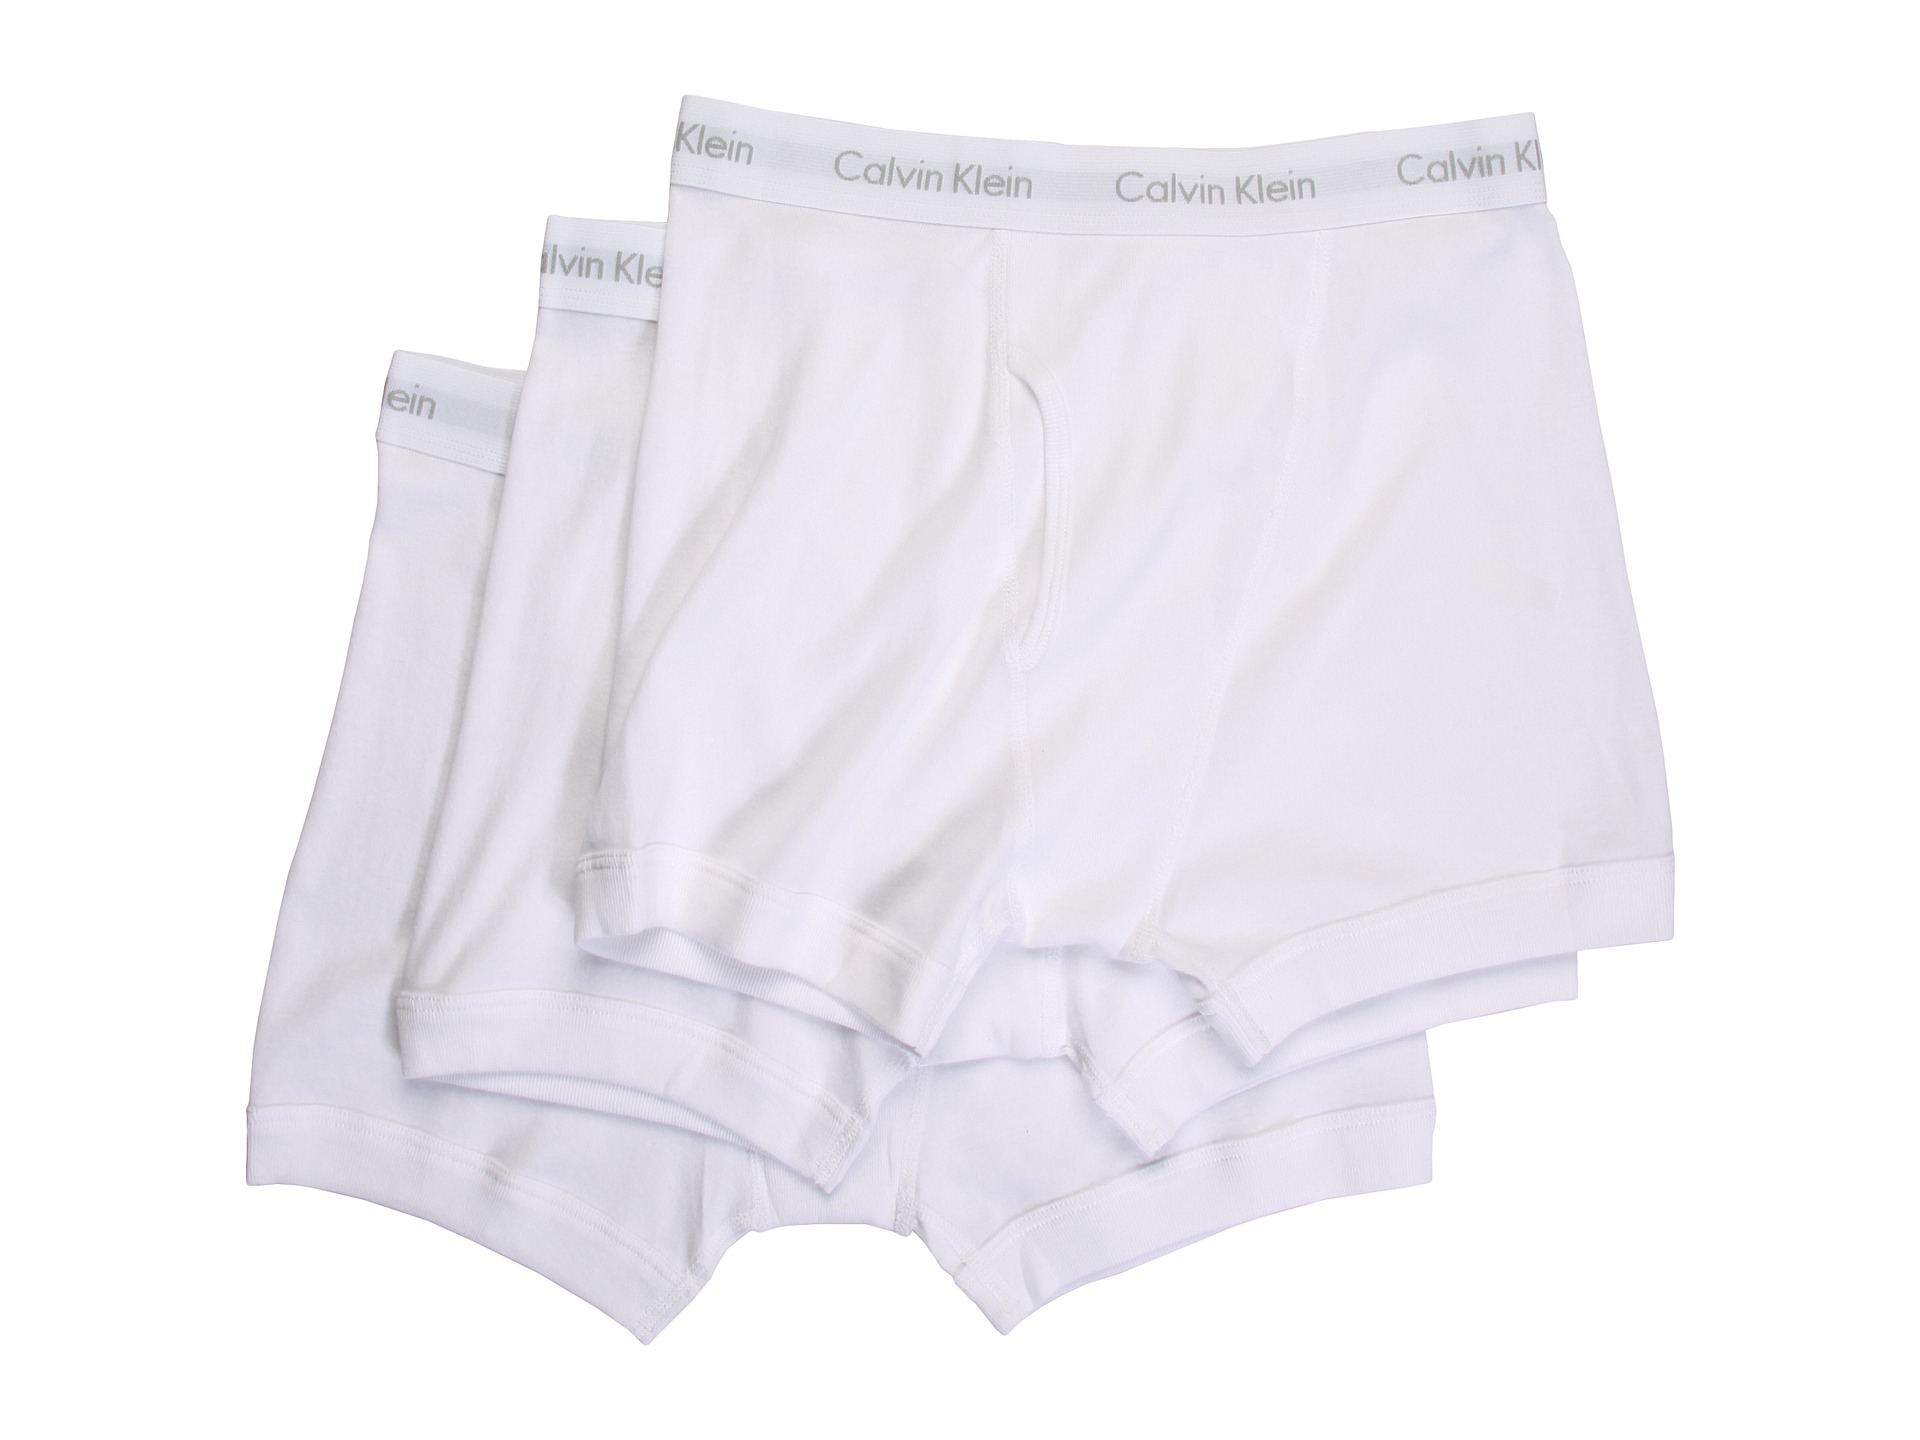 Calvin Klein Underwear Classic Boxer Brief 3 Pack U3019 White | Shipped ...